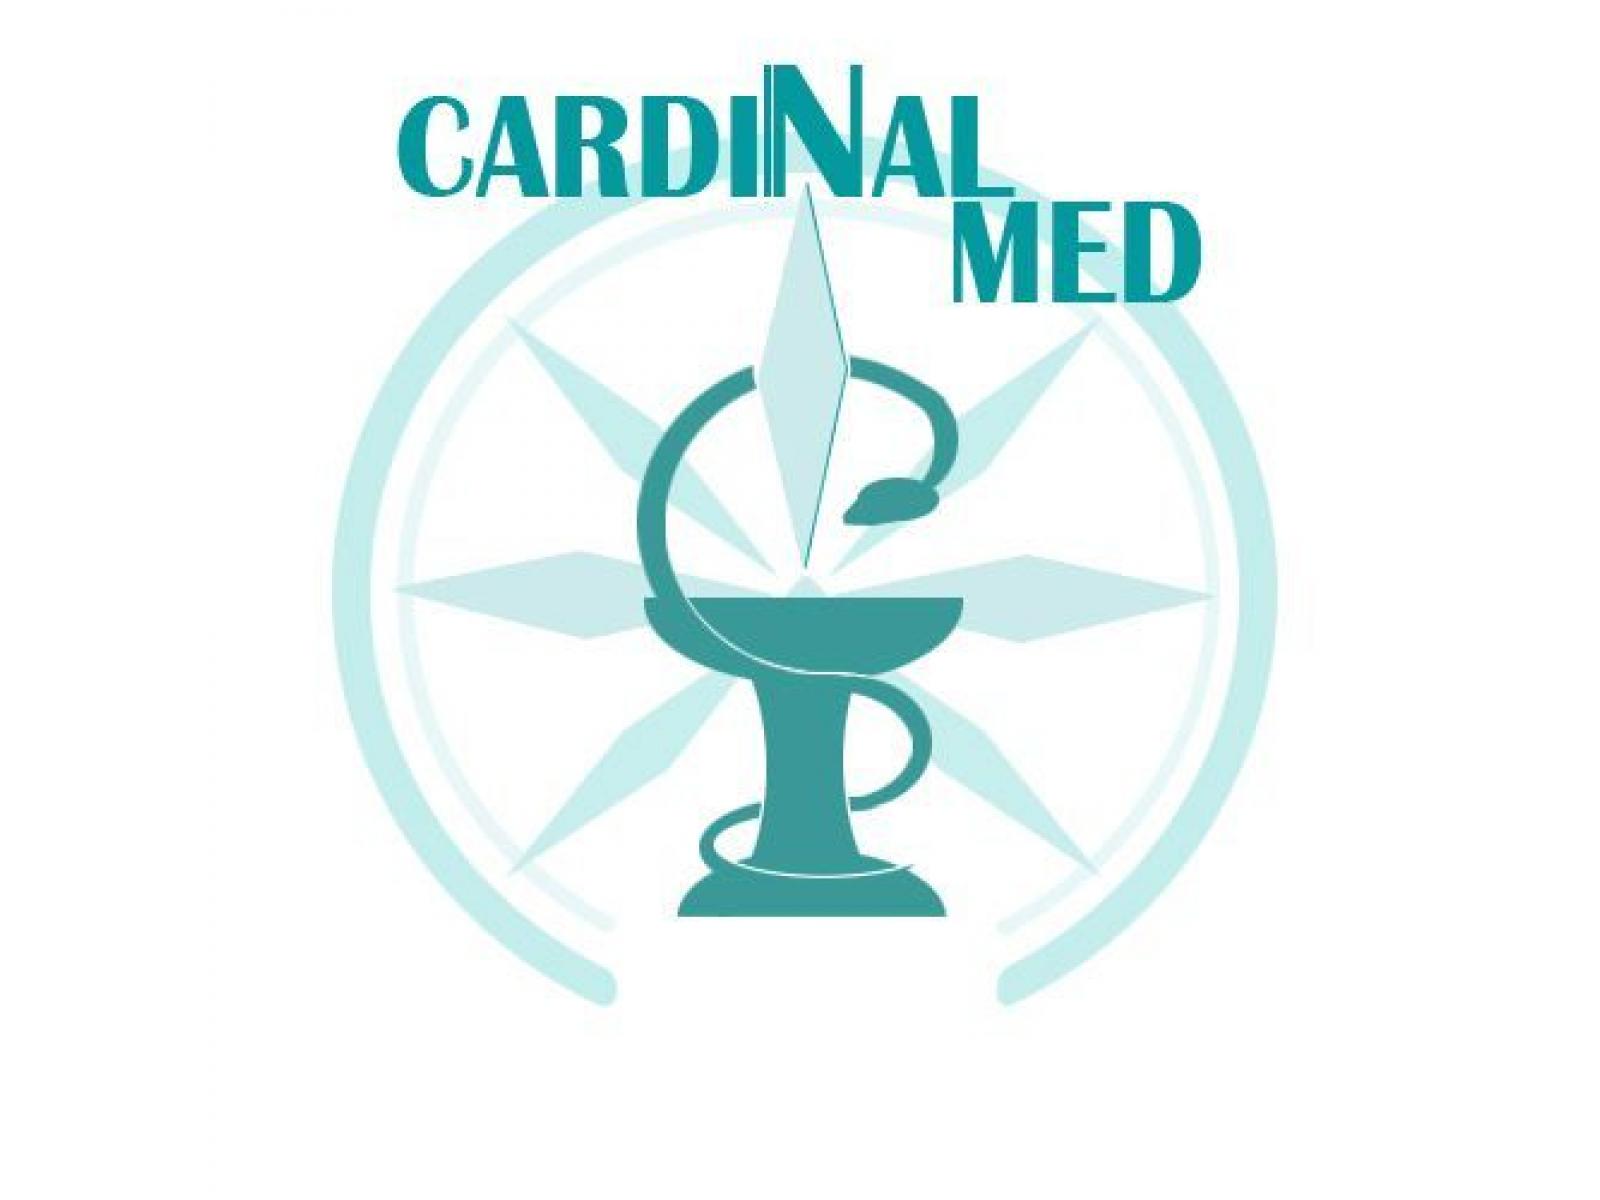 Cardinal Med - 392410_357554844306018_47449821_n.jpg